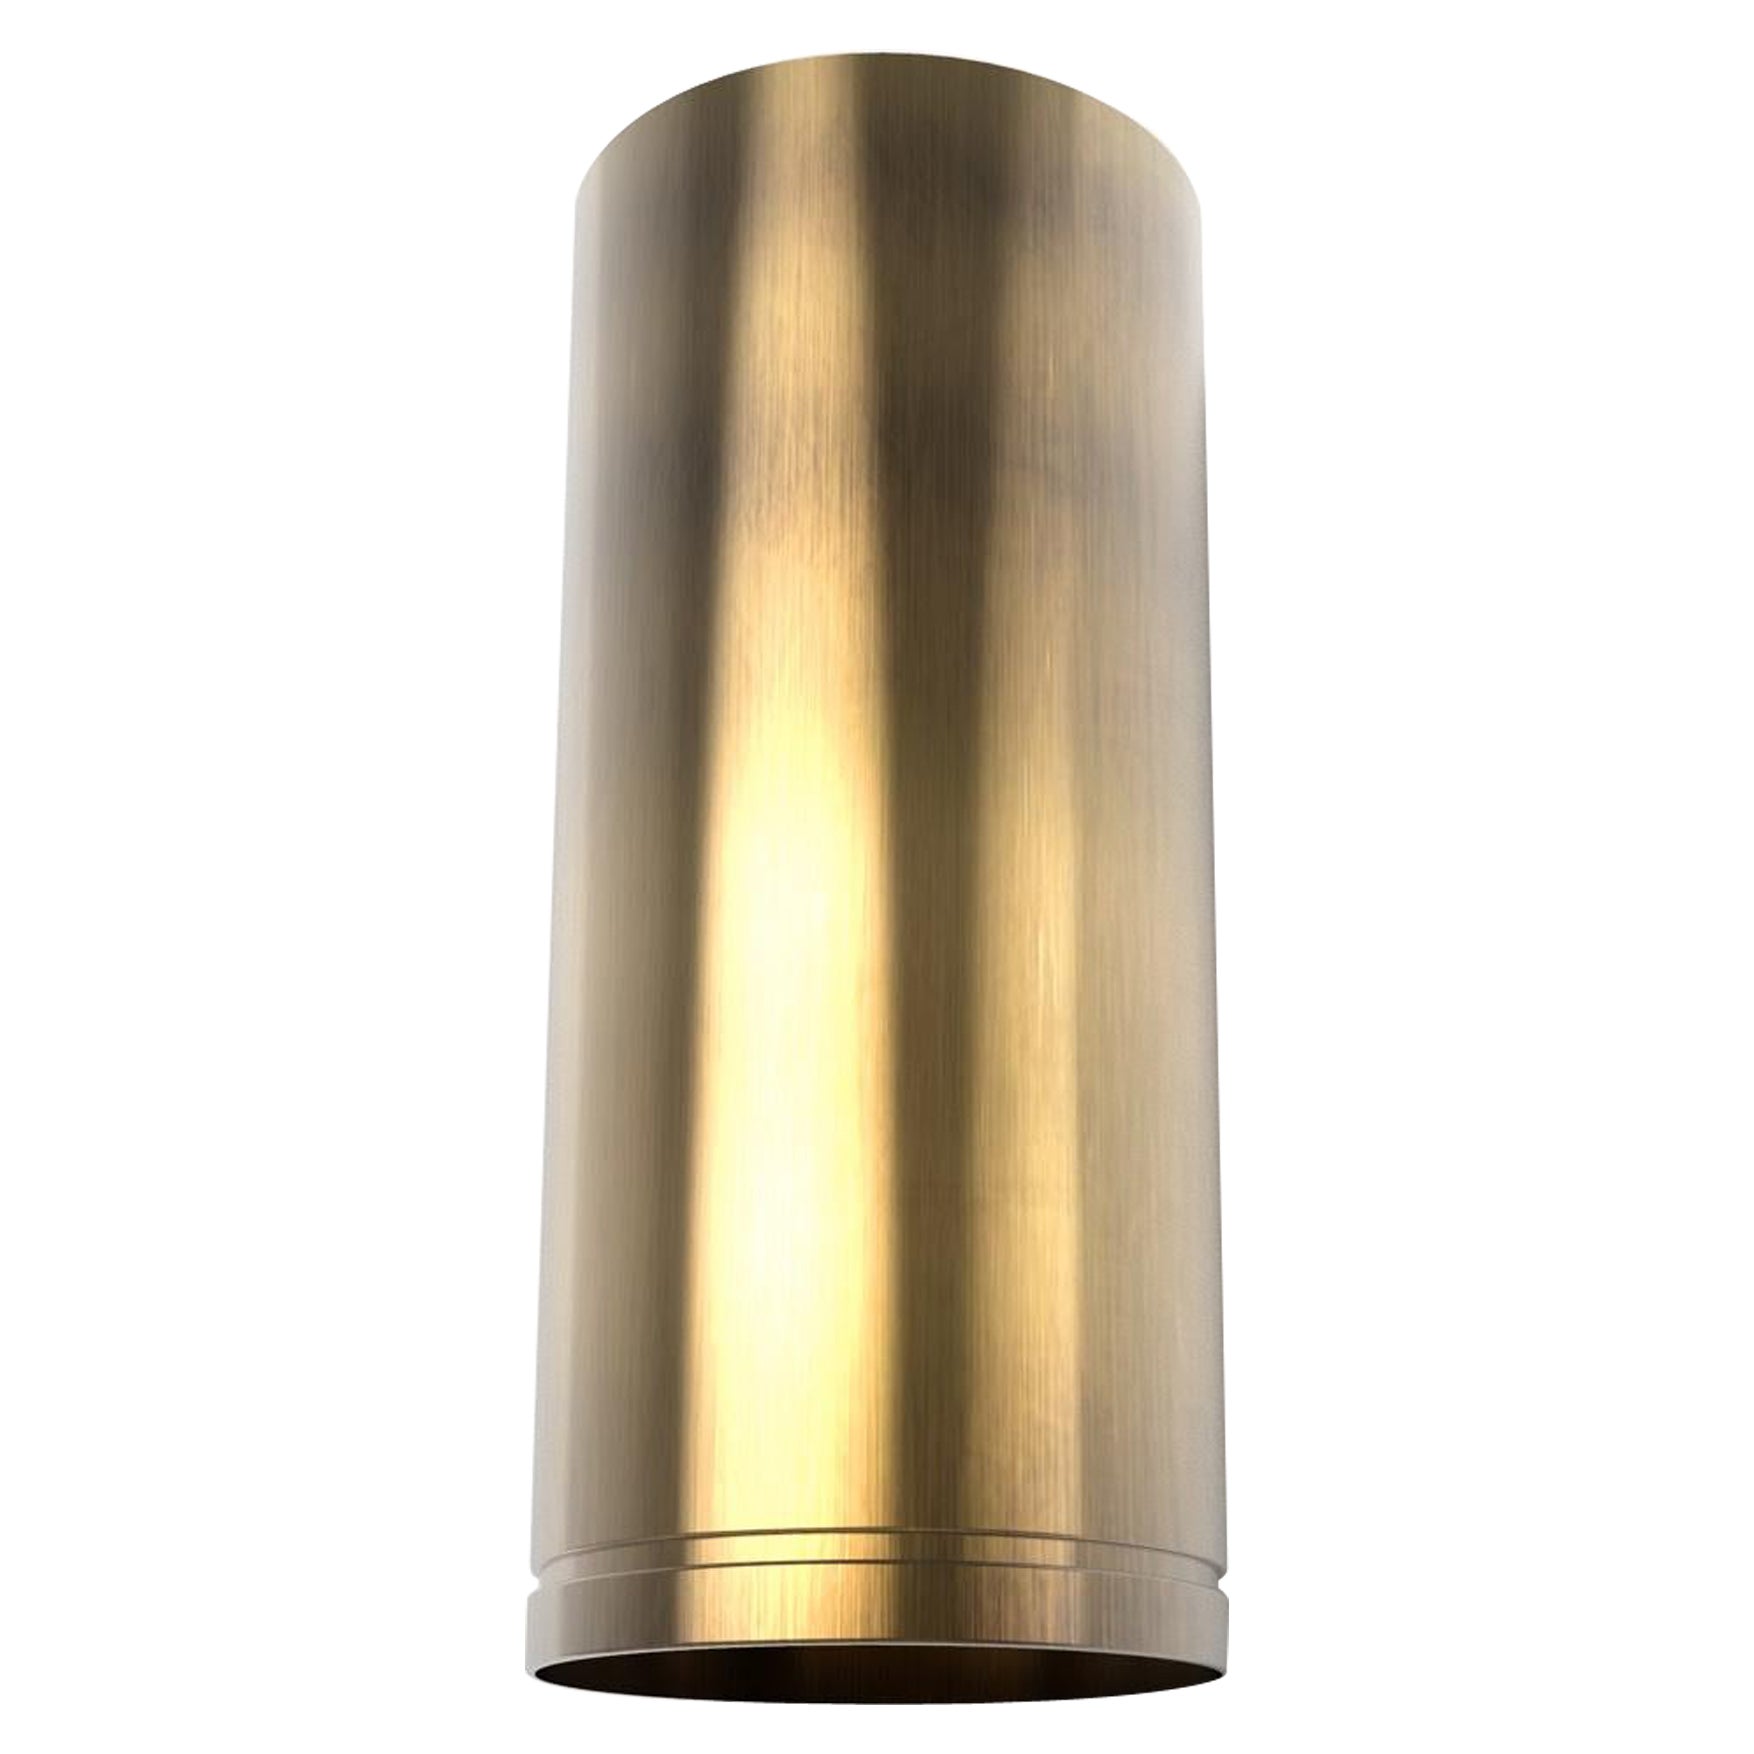 Brass Cylinder Range Hood - OLIVIA 2.0 - Custom